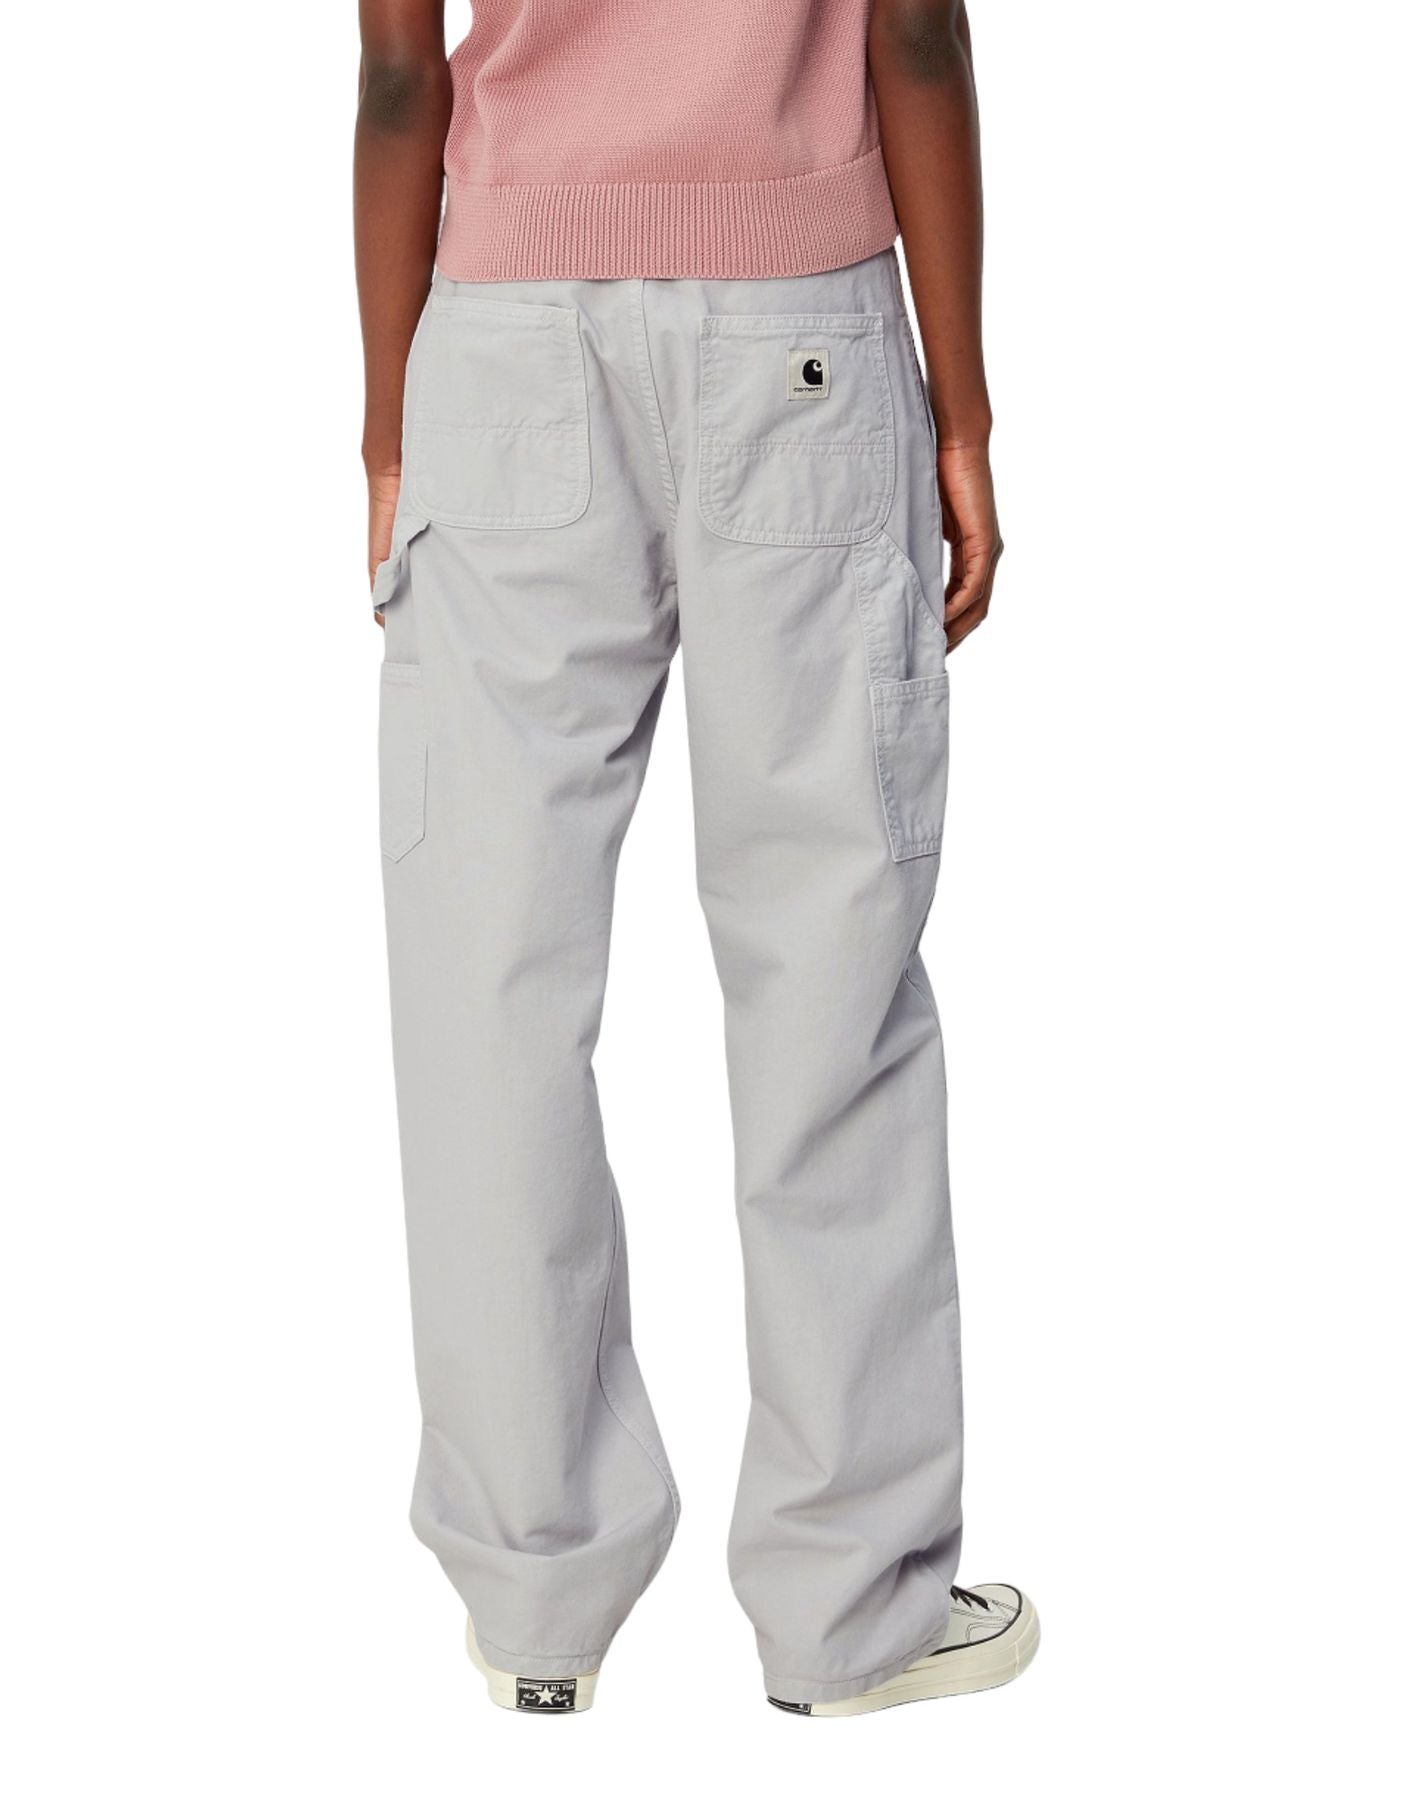 Pantalones mujer i026588 1yegd carhartt wip